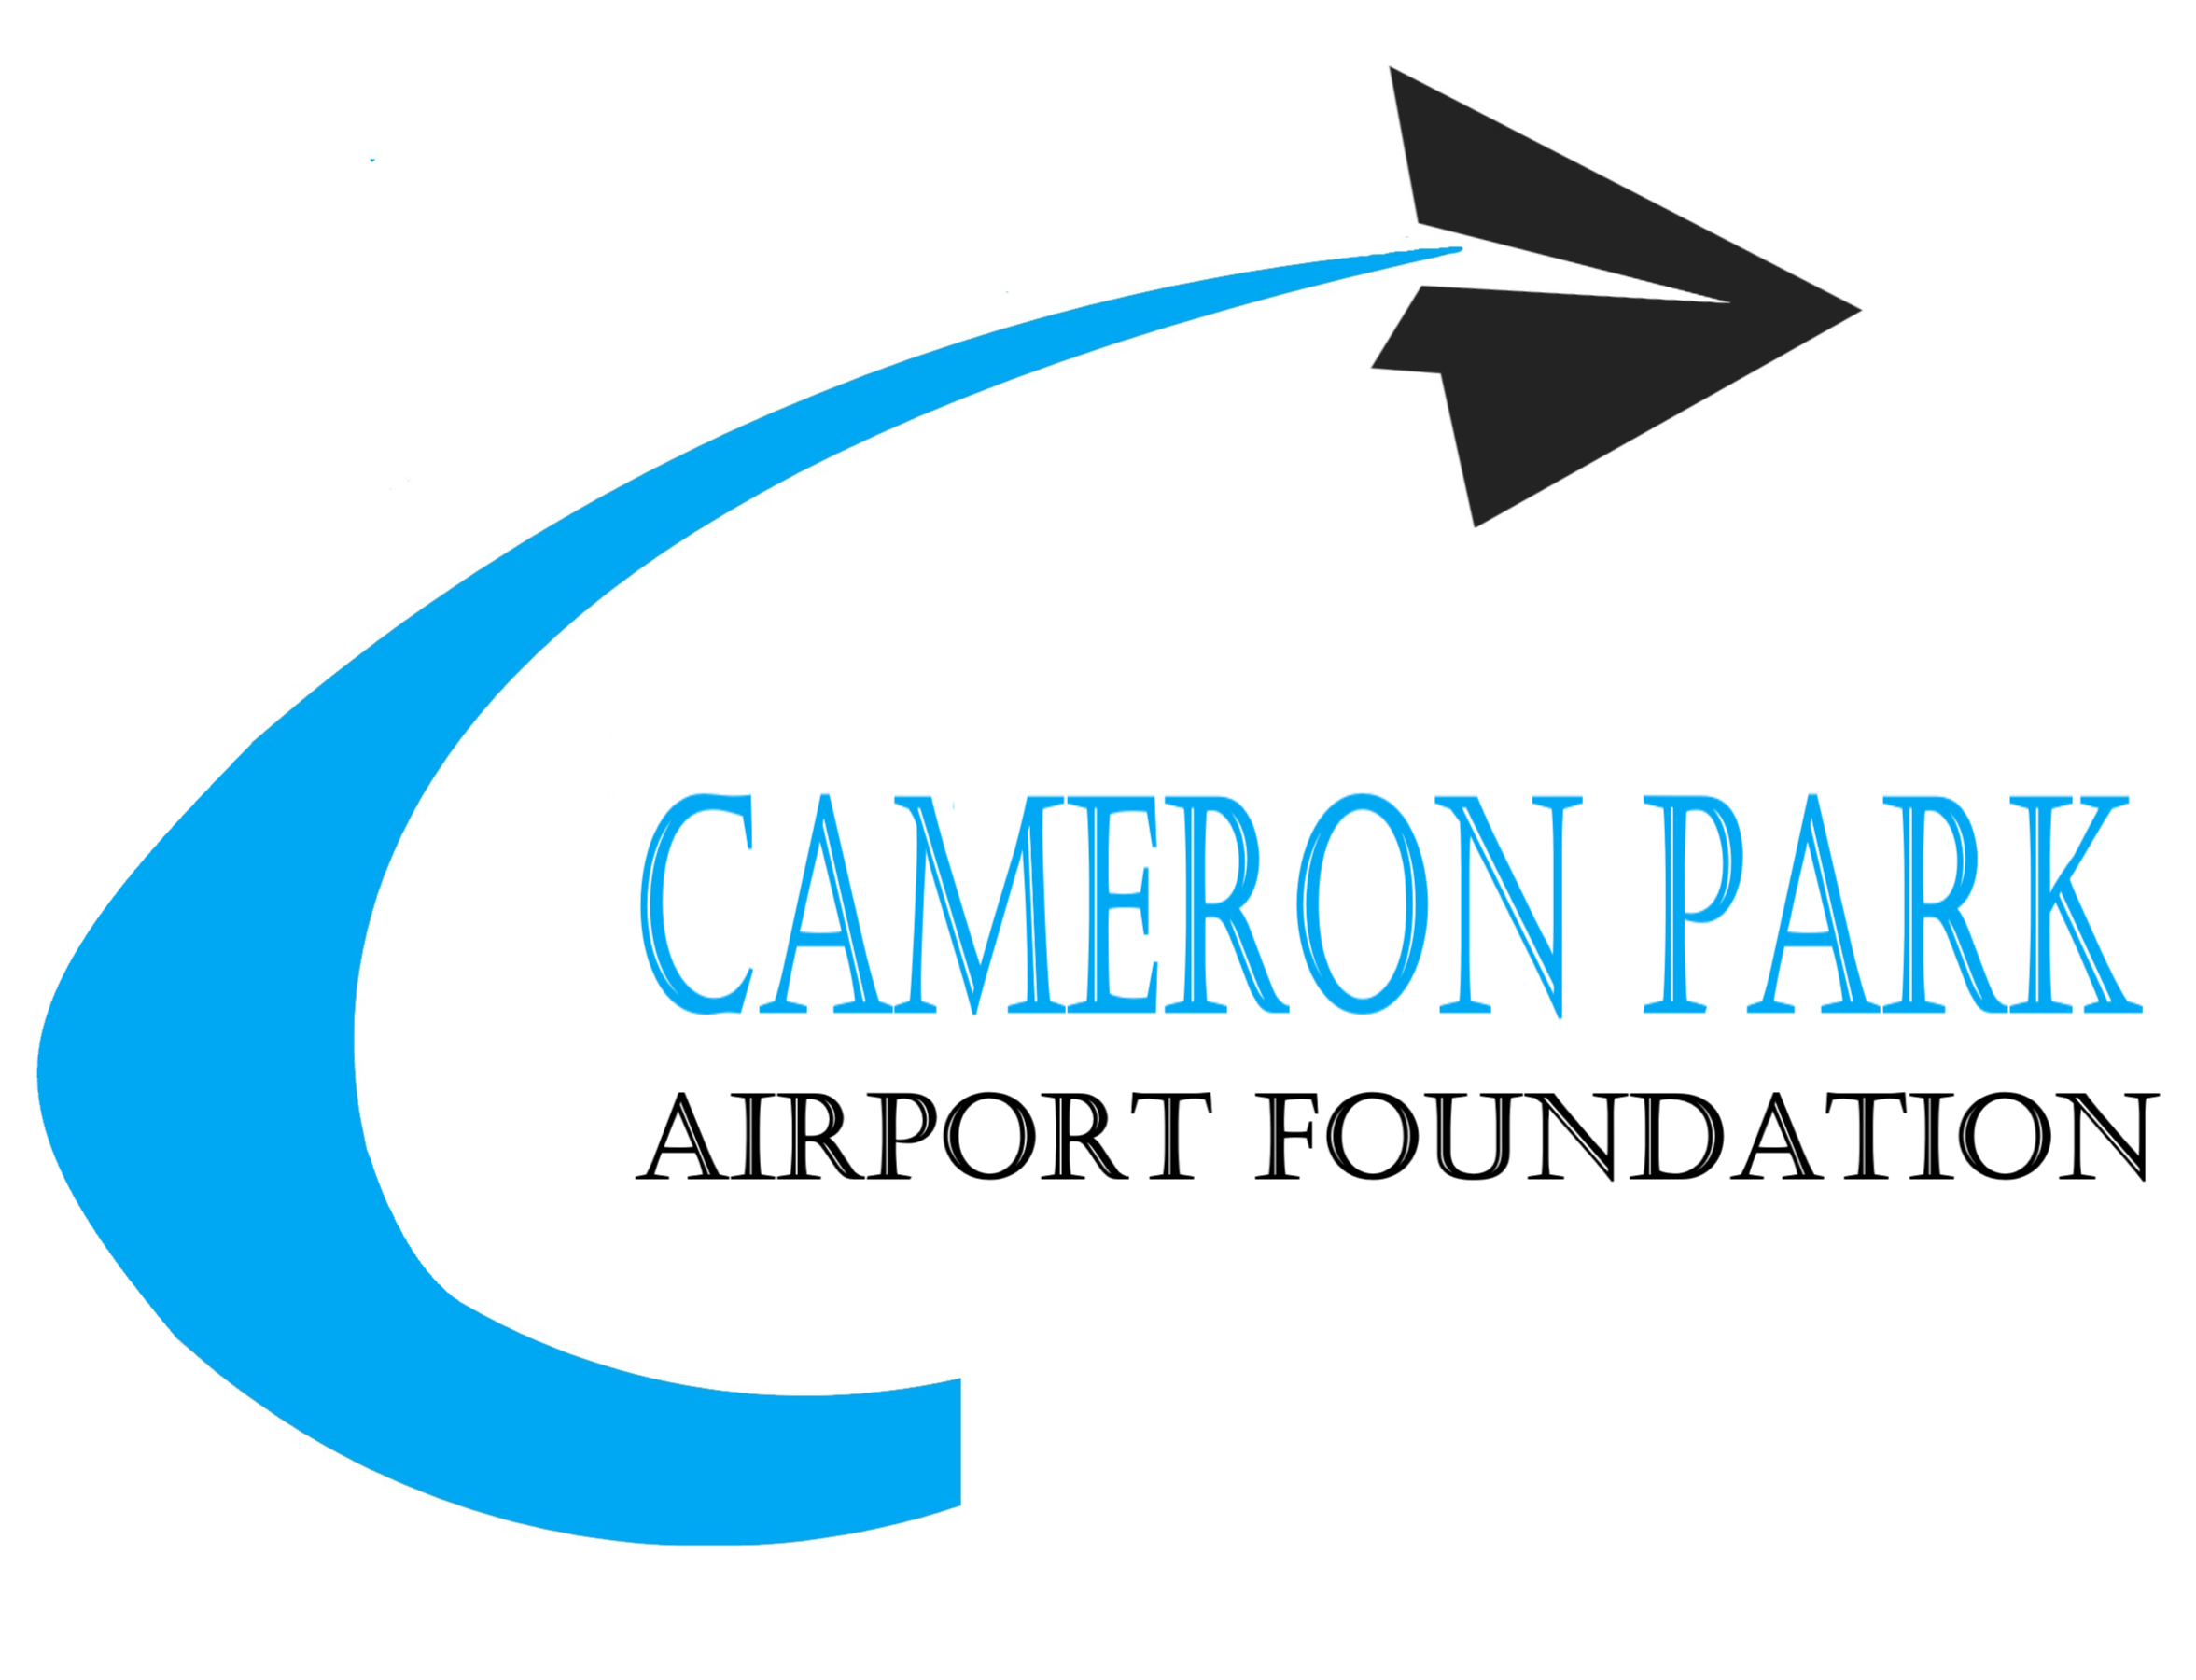 Cameron Park Airport Foundation